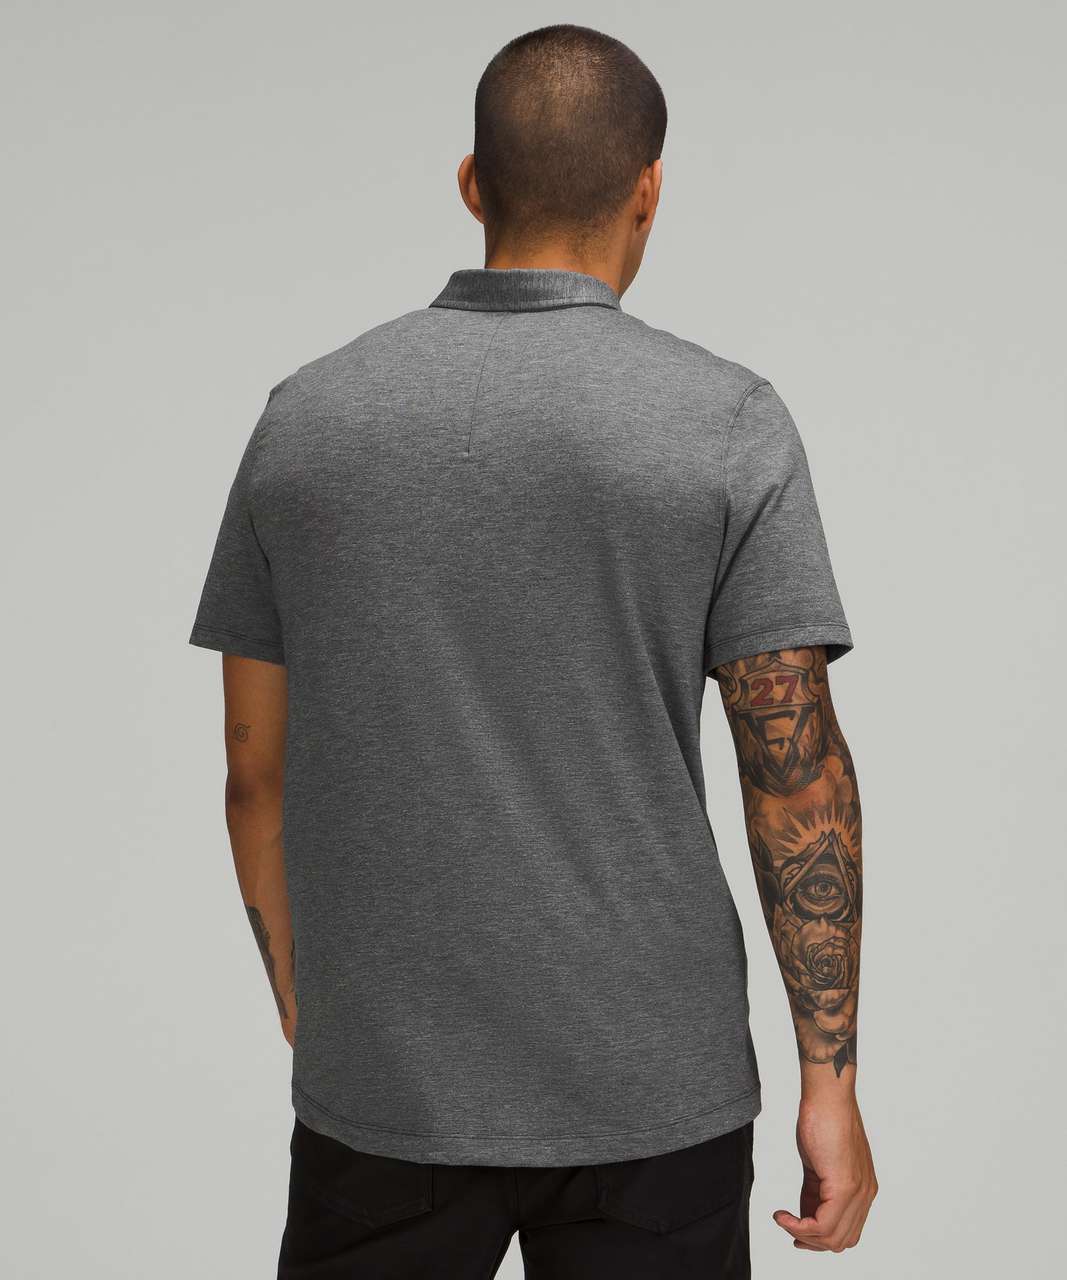 Lululemon Evolution Short Sleeve Polo Shirt *Pique Fabric - Heathered Black